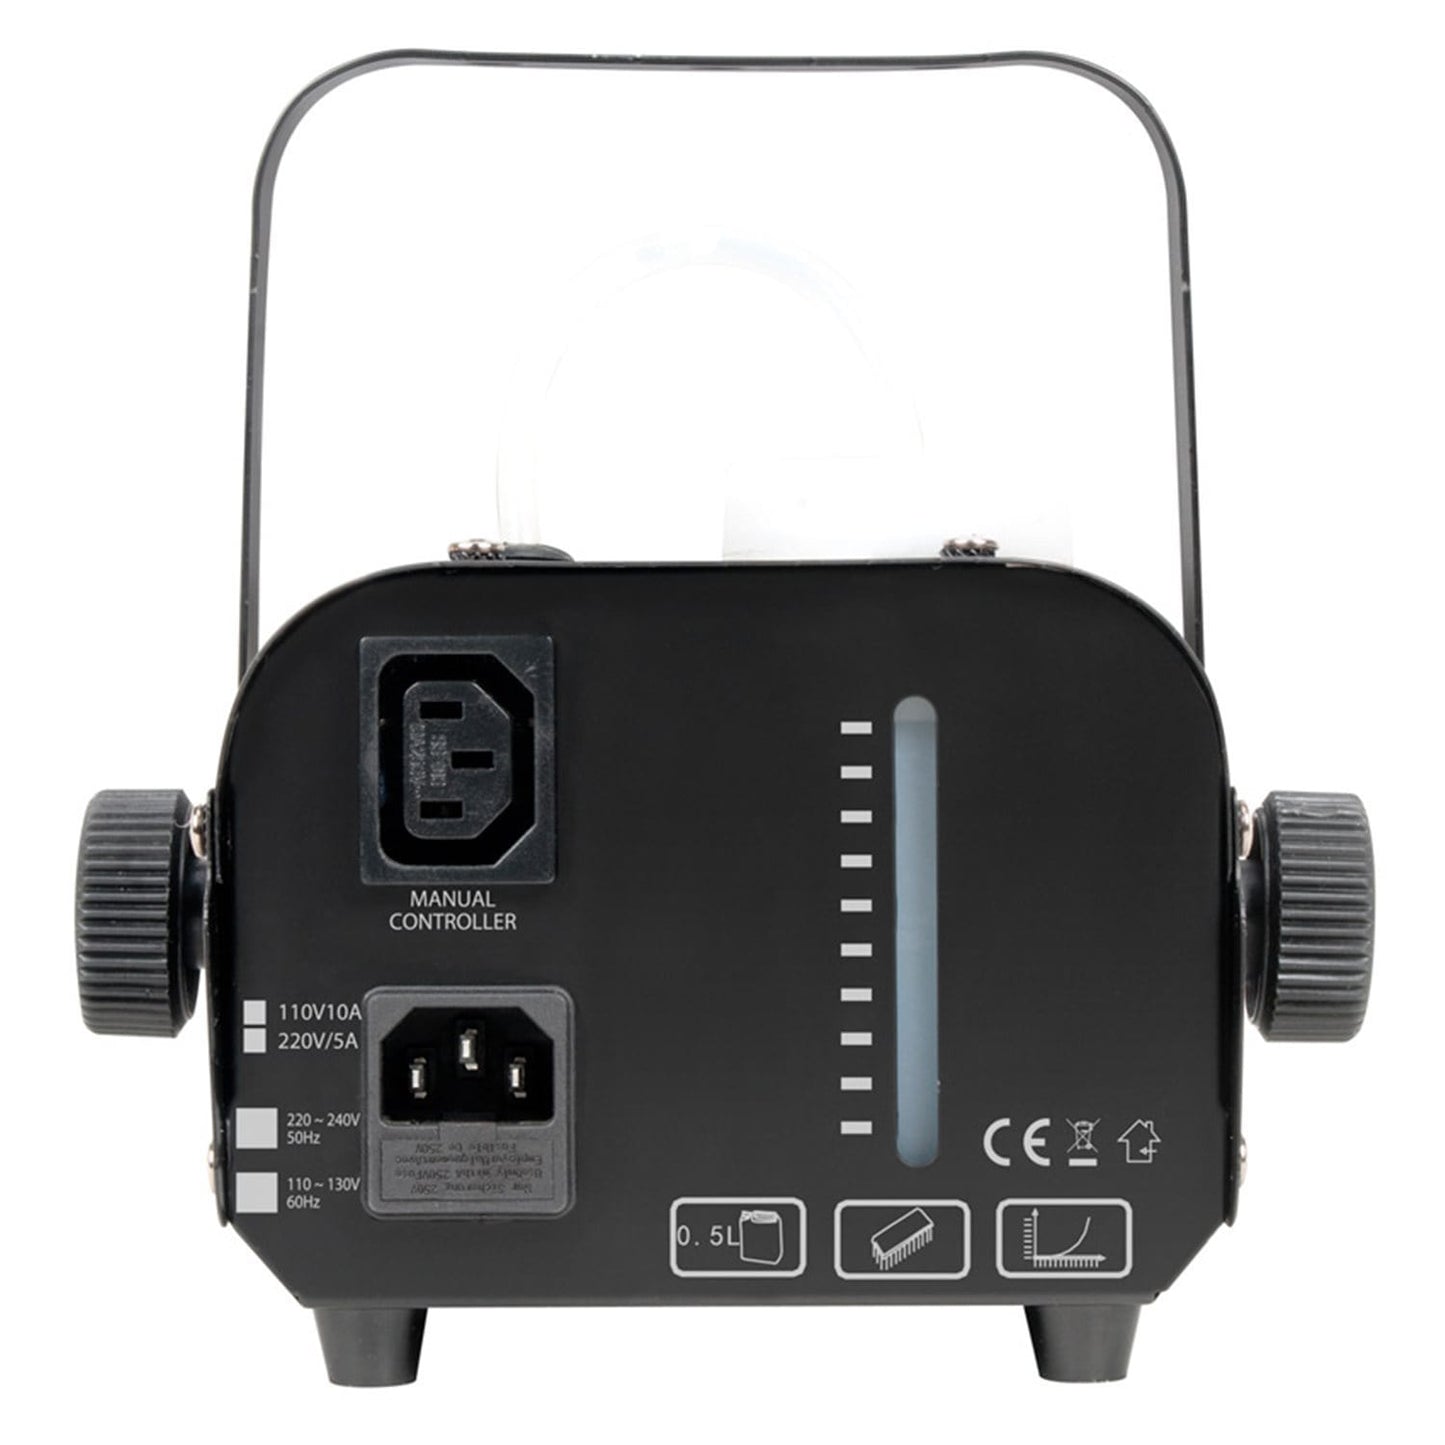 ADJ American DJ VF400 Water-Based Fog Machine with Remote - PSSL ProSound and Stage Lighting